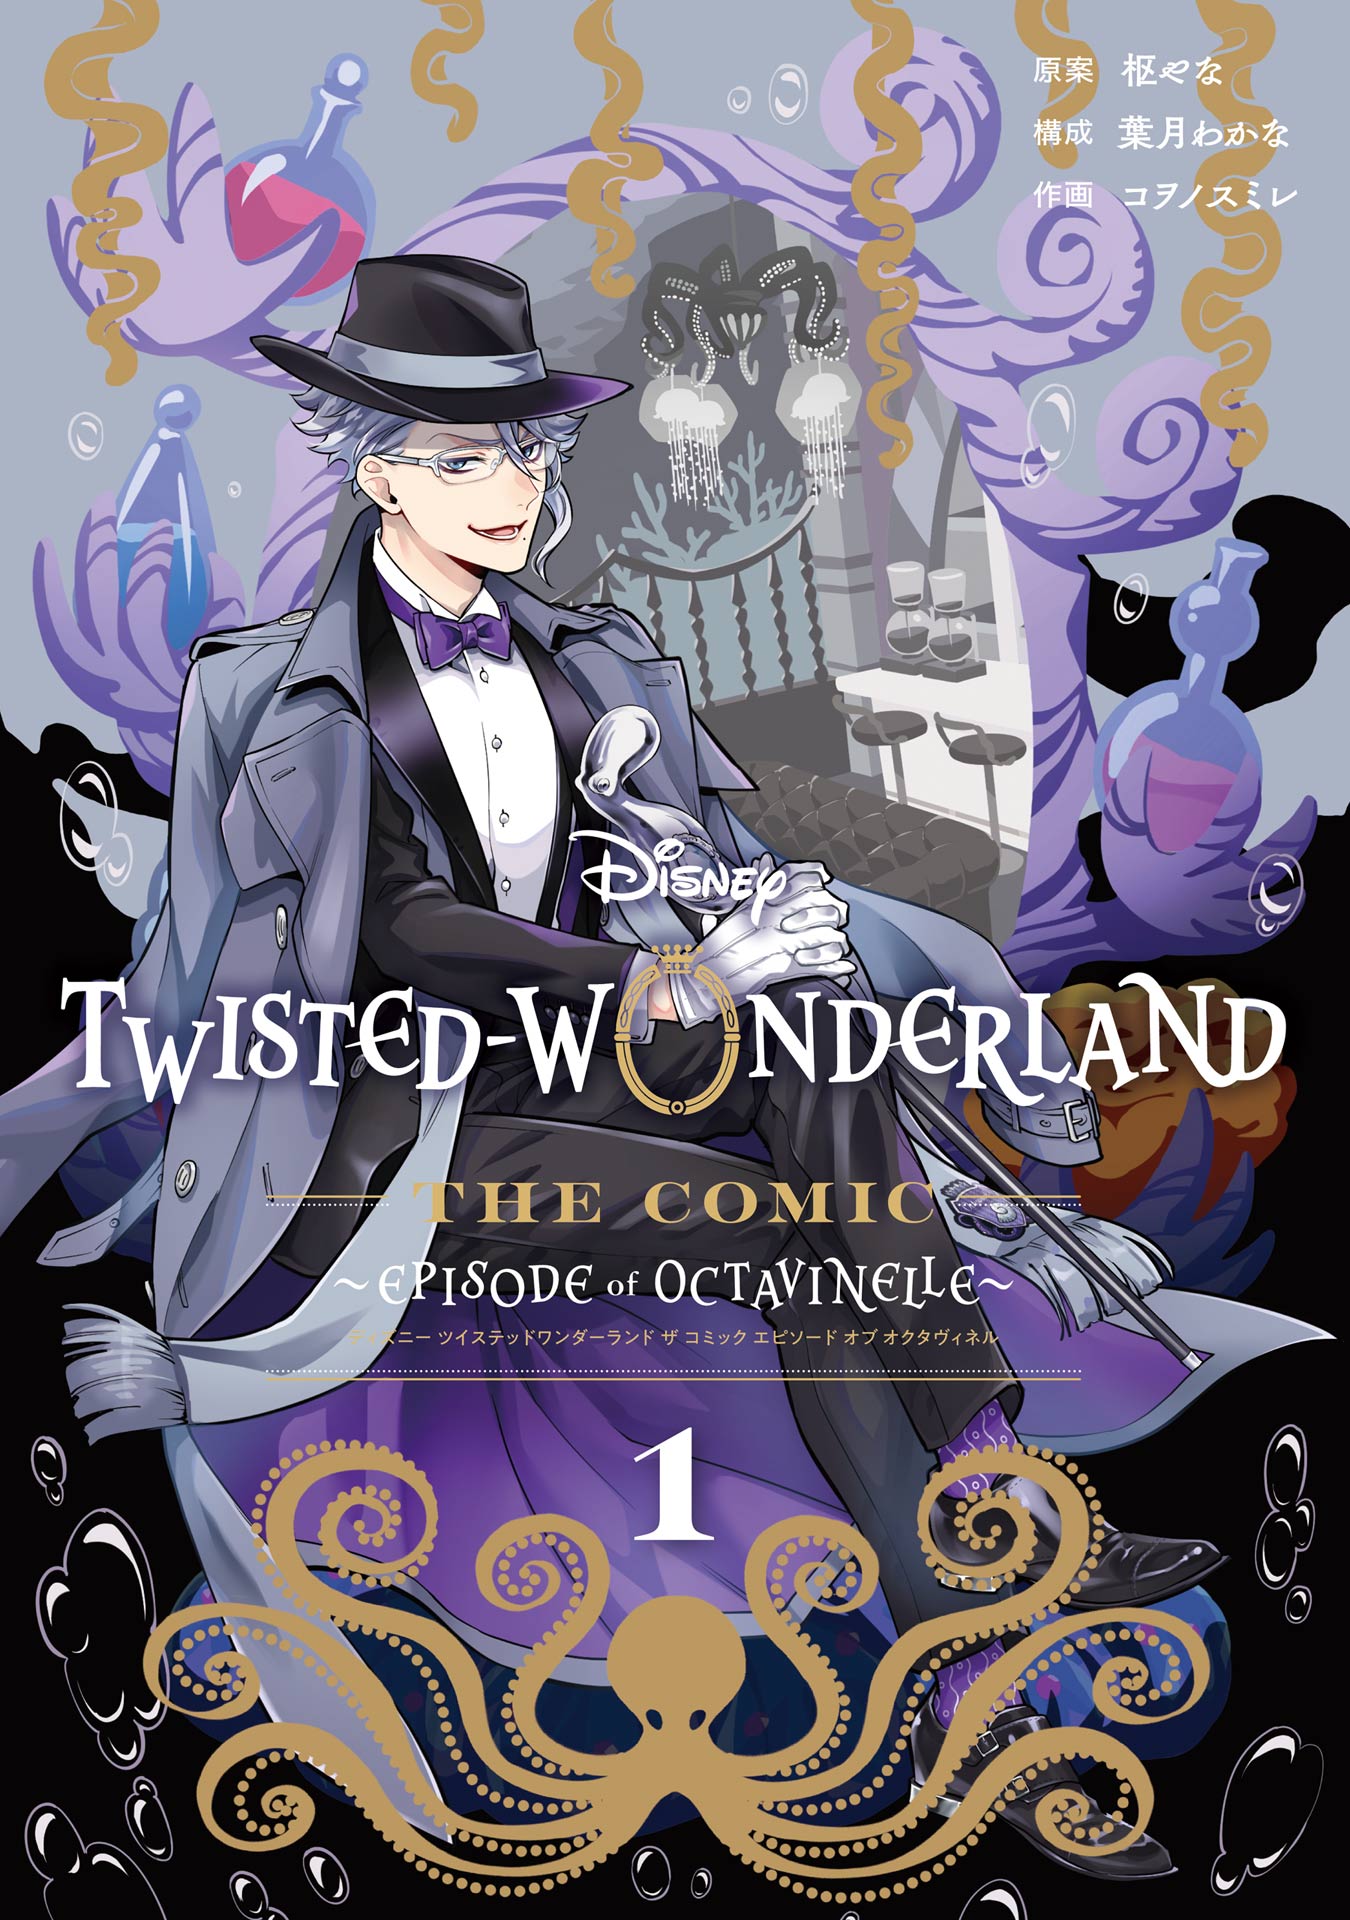 Disney Twisted Wonderland - The Comic - ~Episode of Octavinelle~